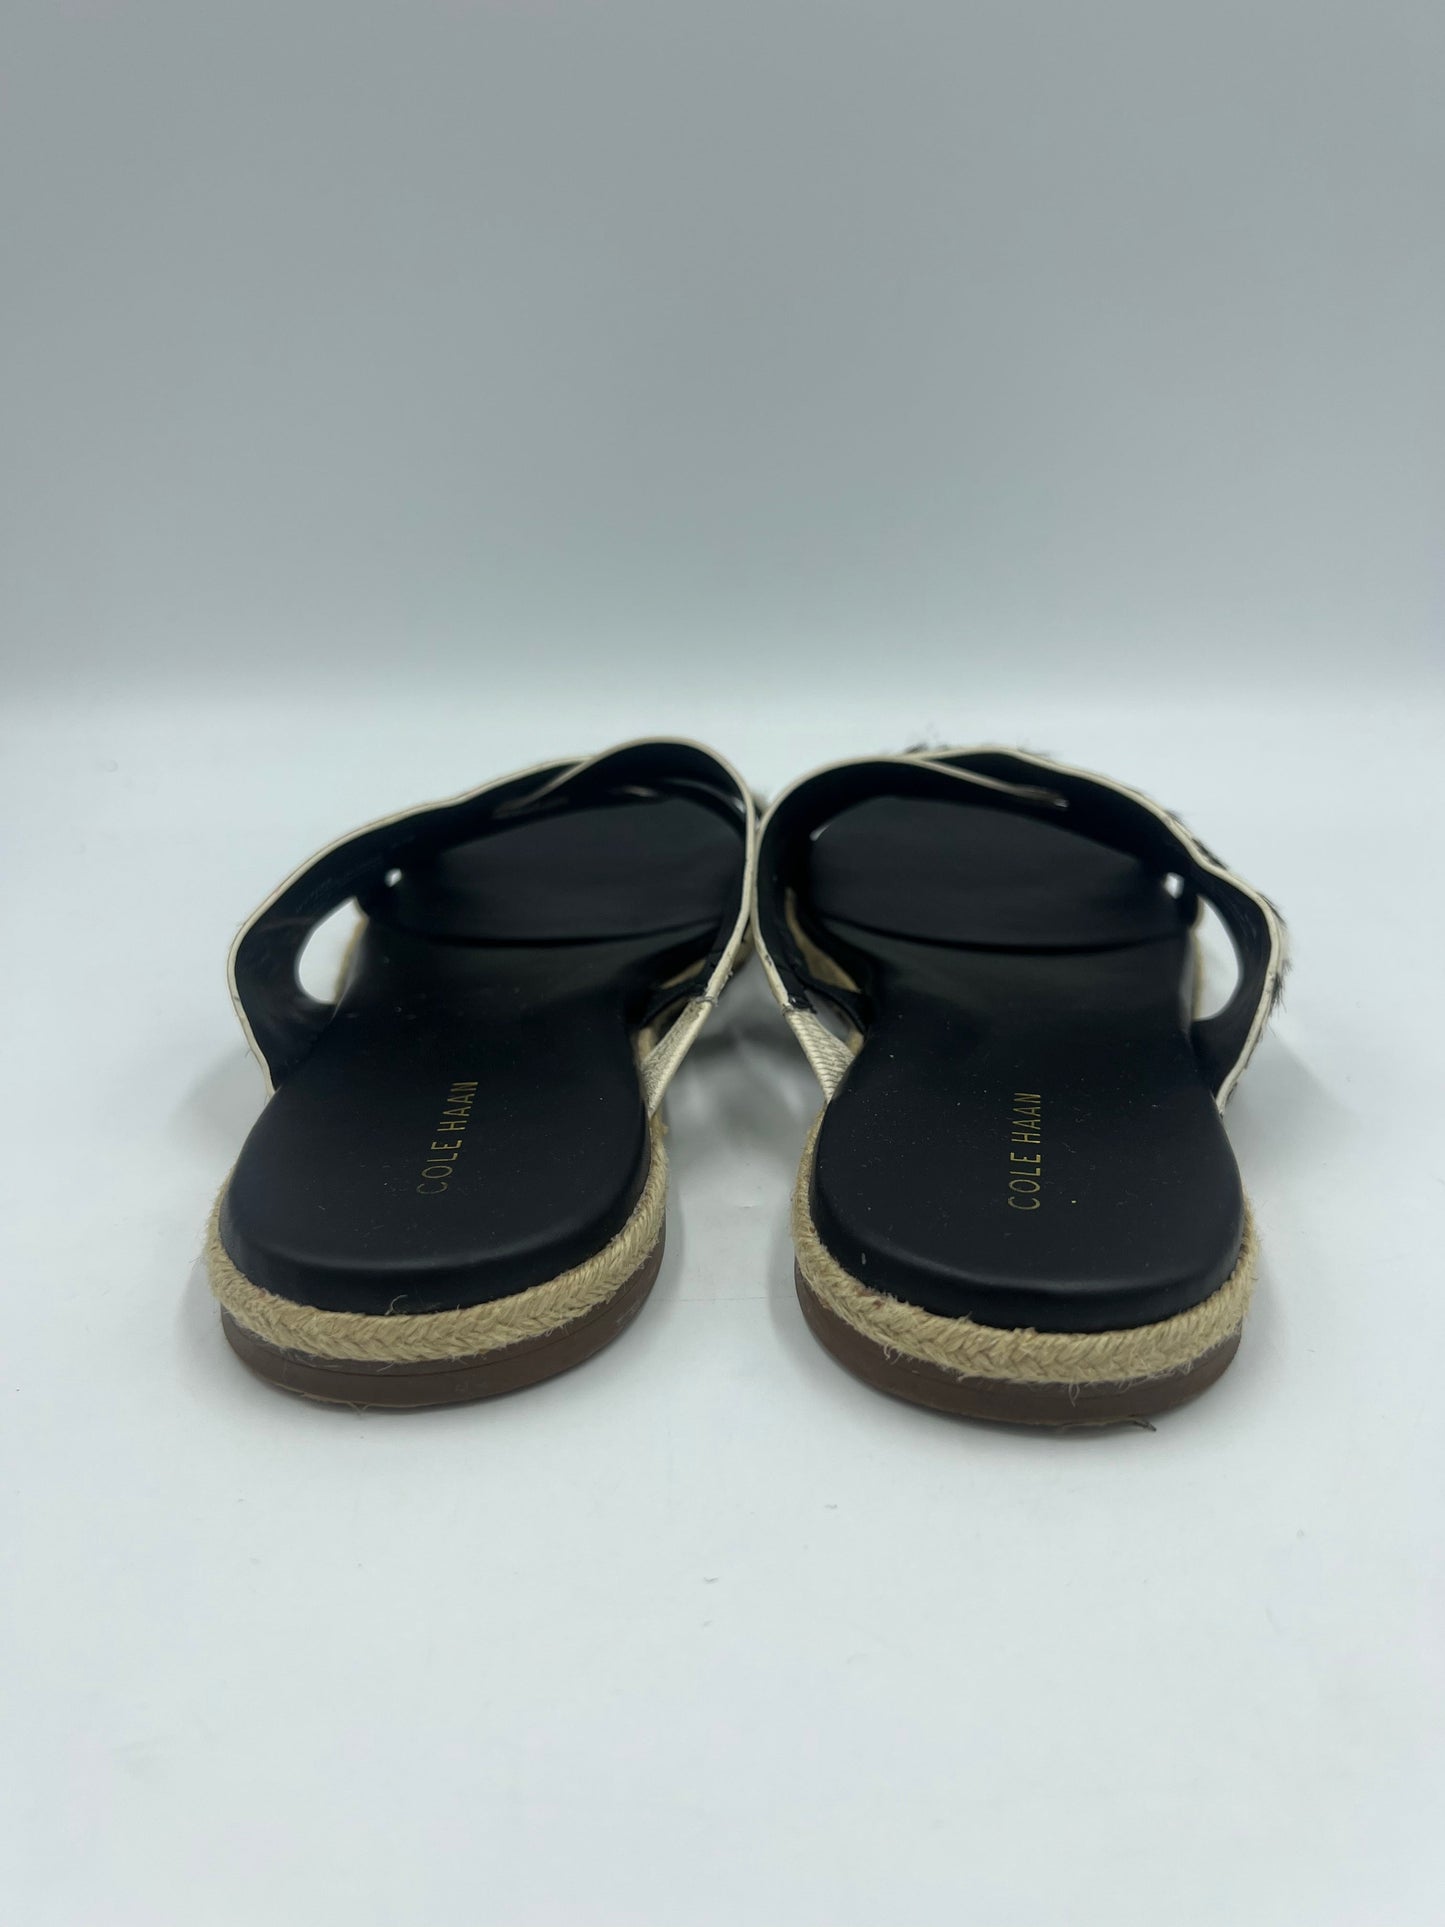 Sandals Designer By Cole-haan  Size: 8.5